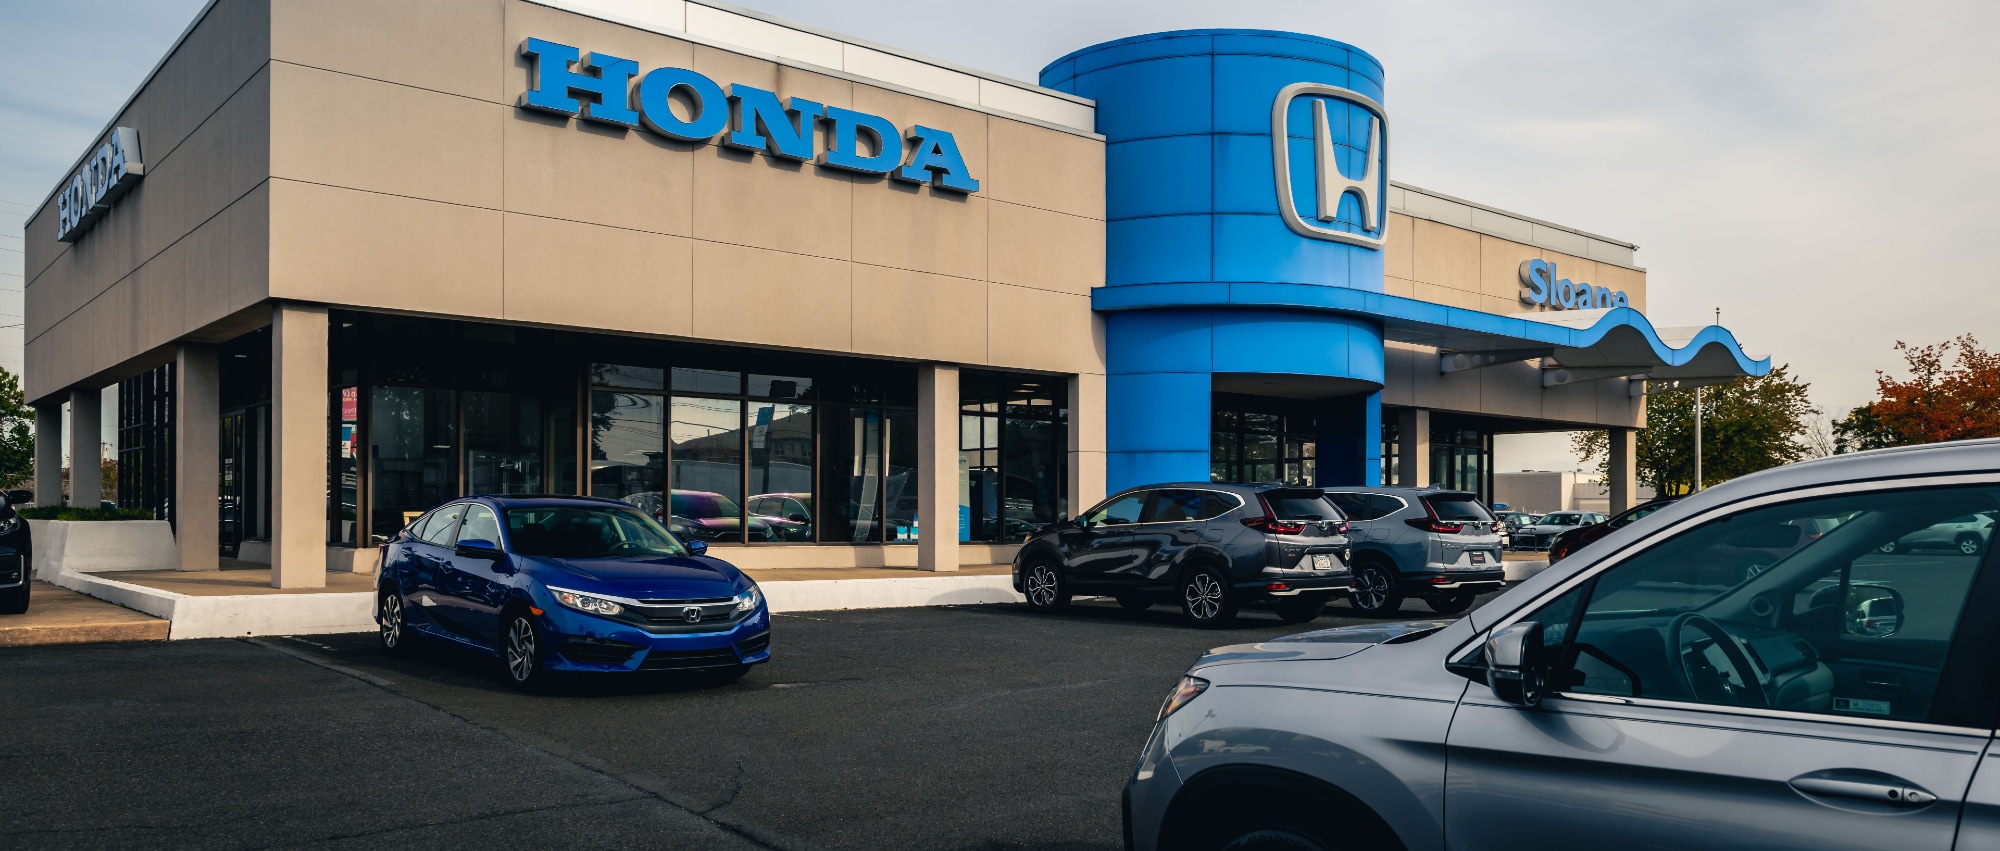 Honda Dealership Philadelphia.